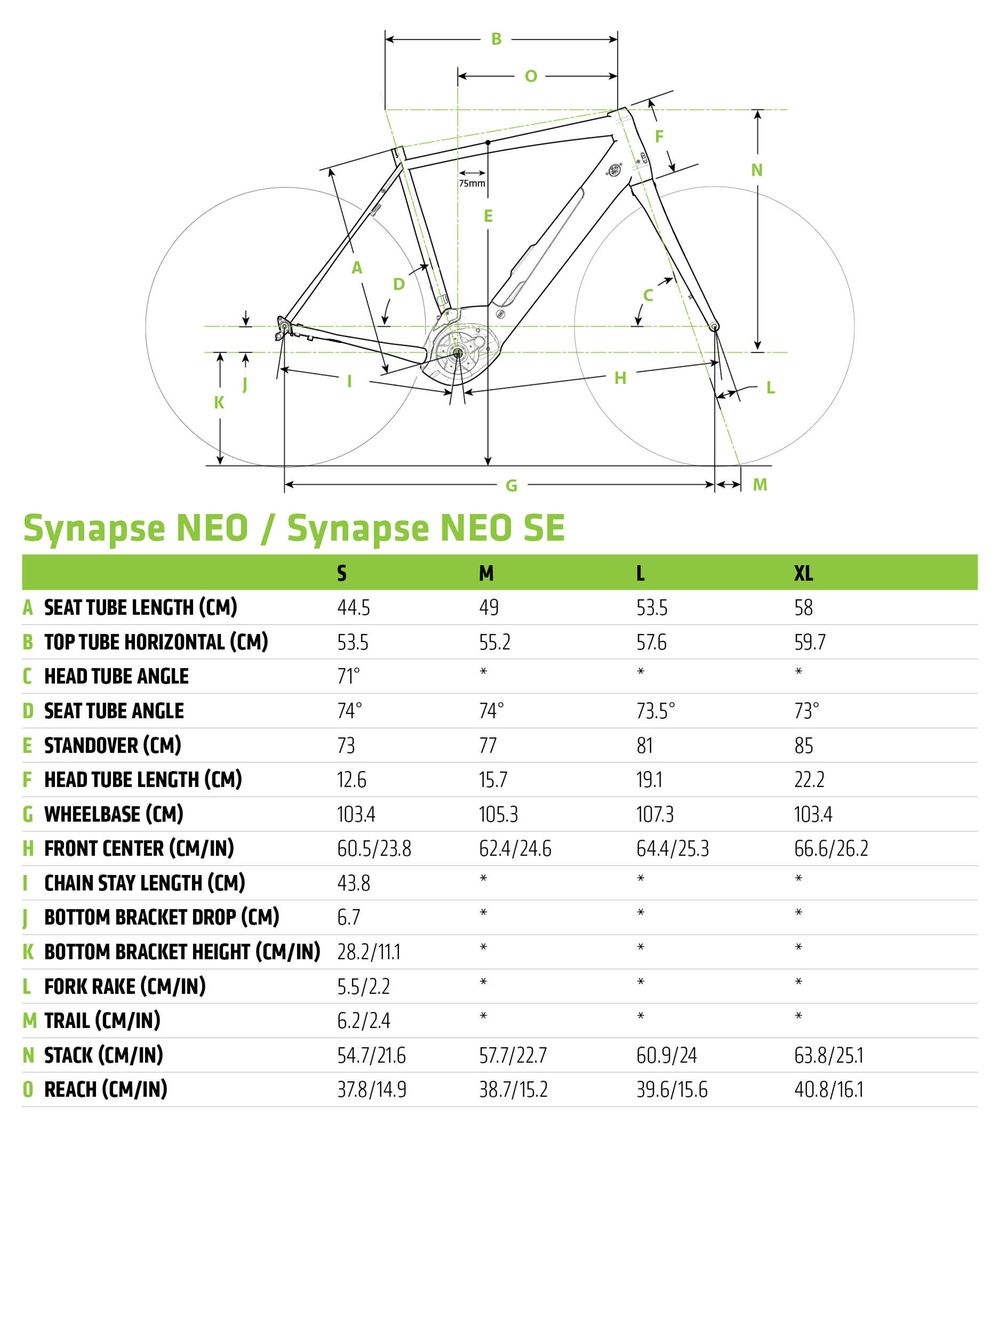 Synapse NEO 2 - 